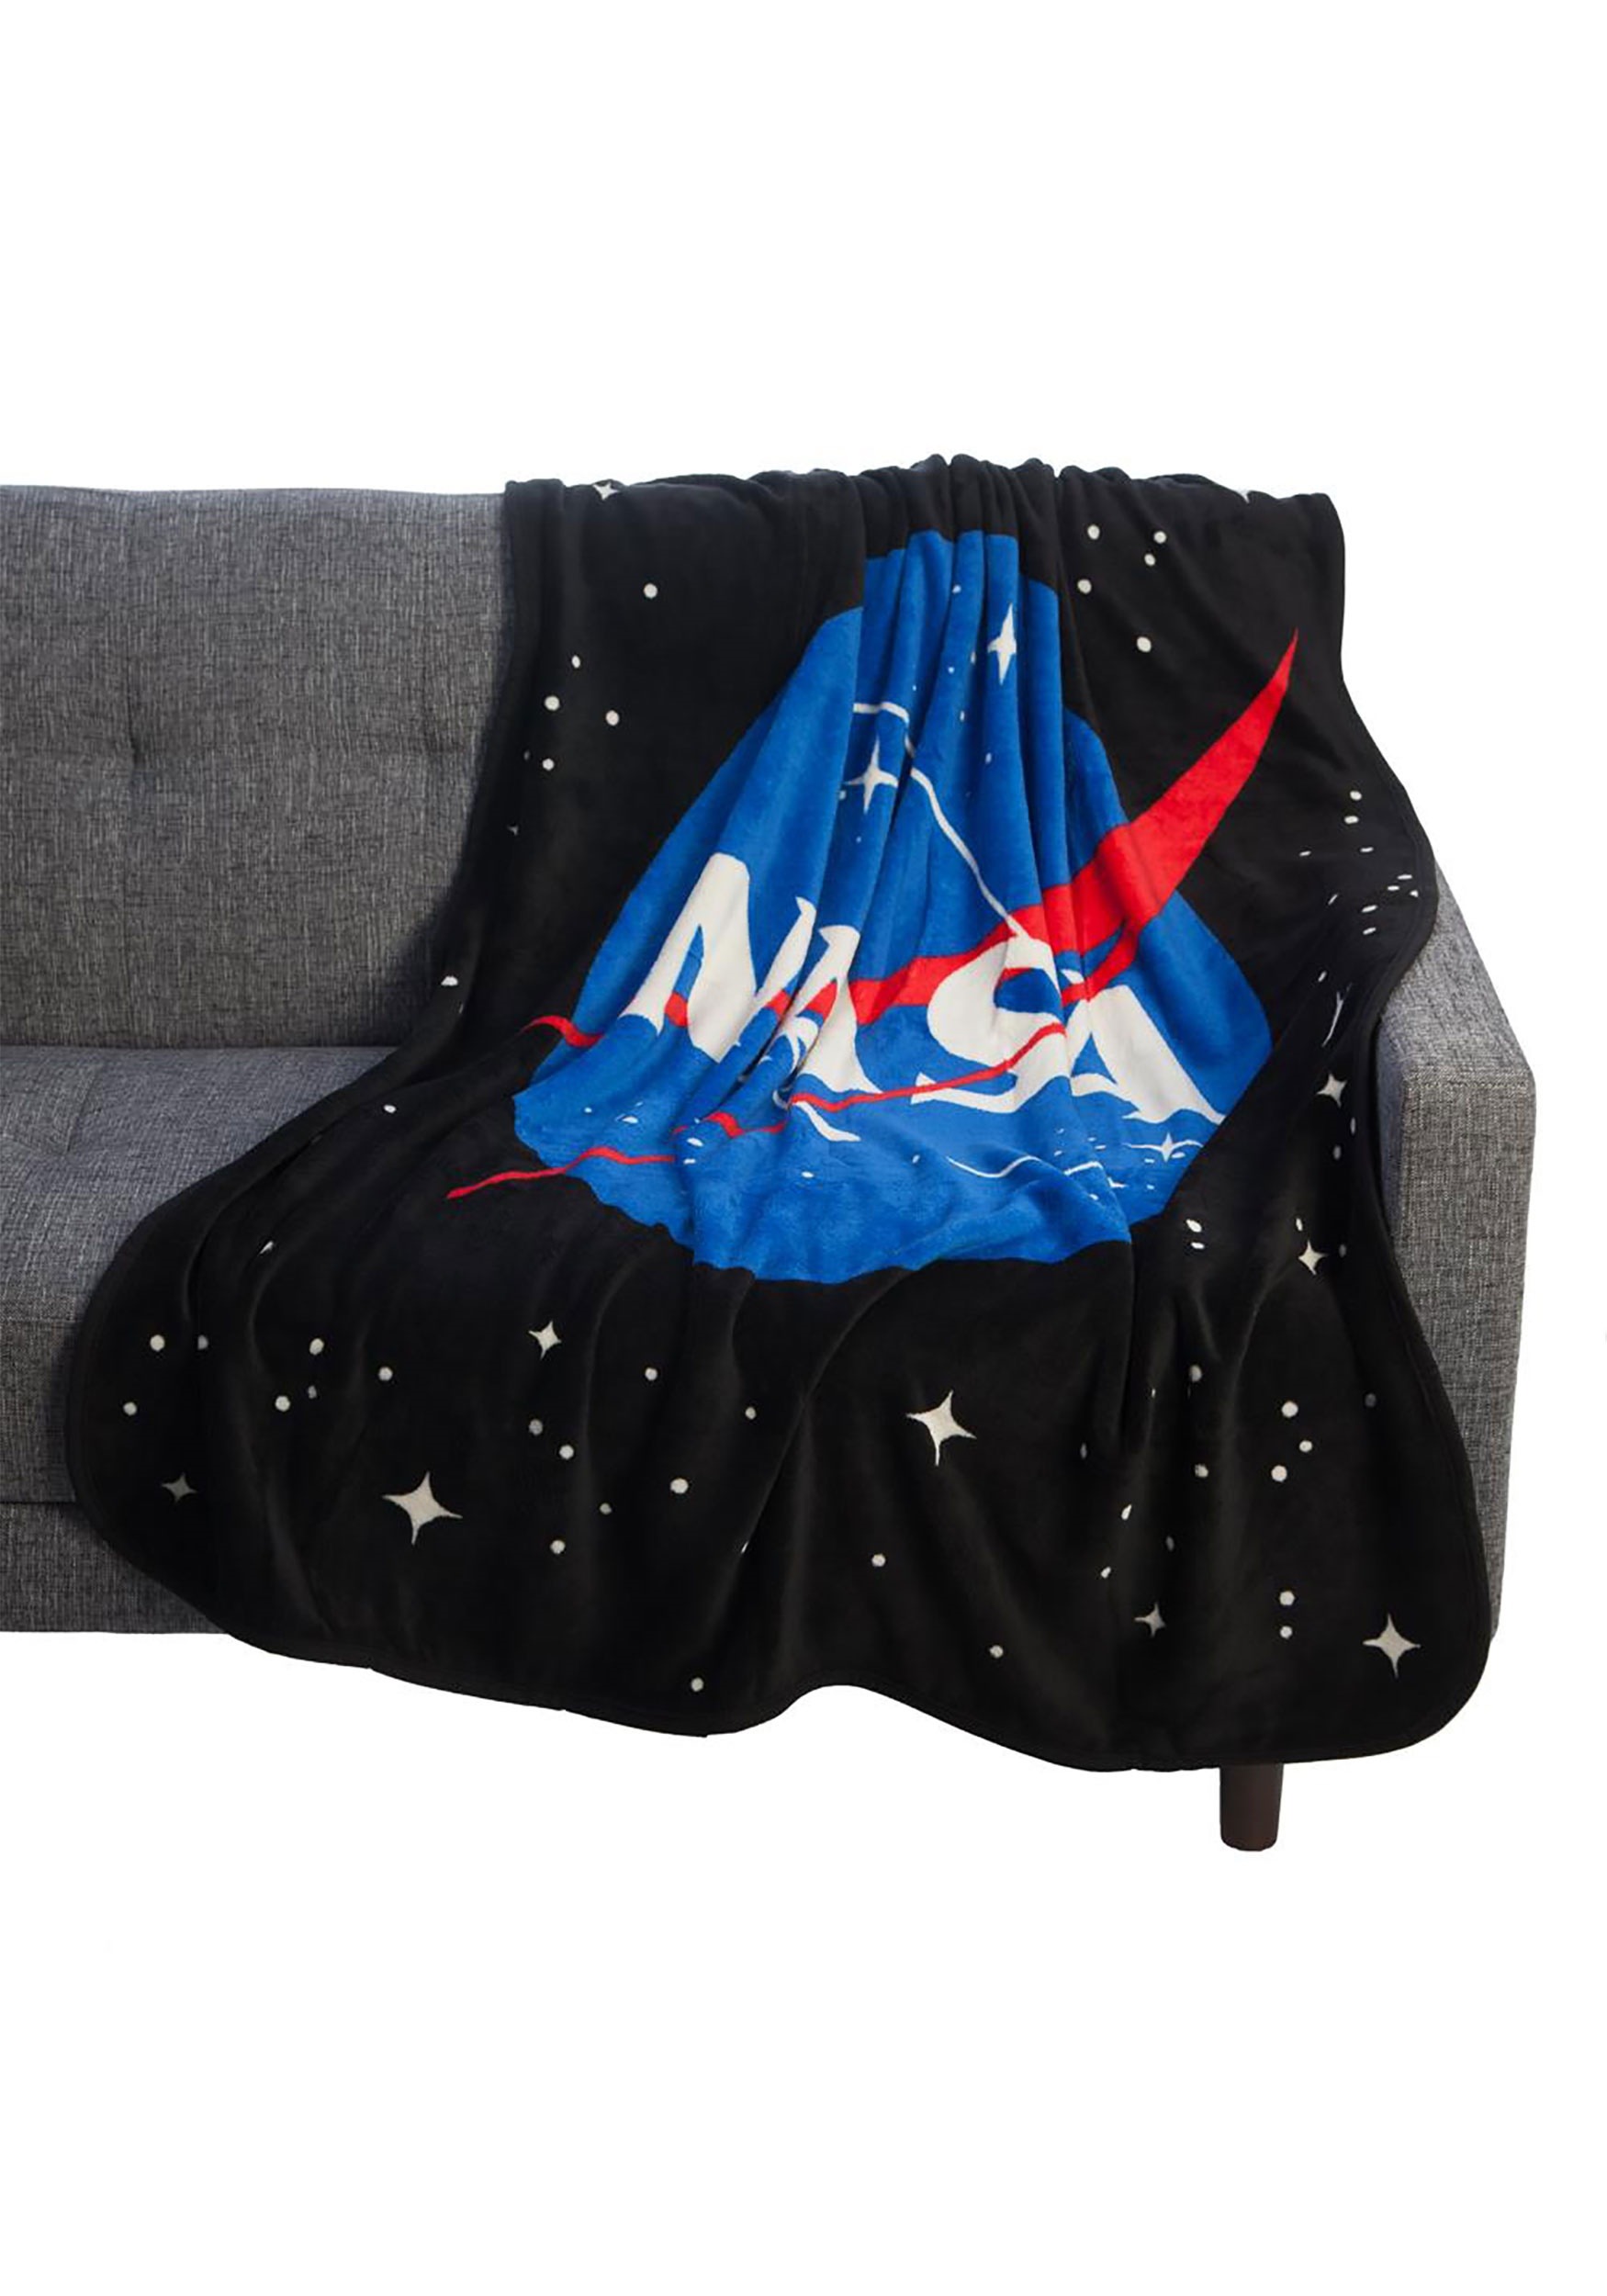 NASA Icon Fleece Blanket